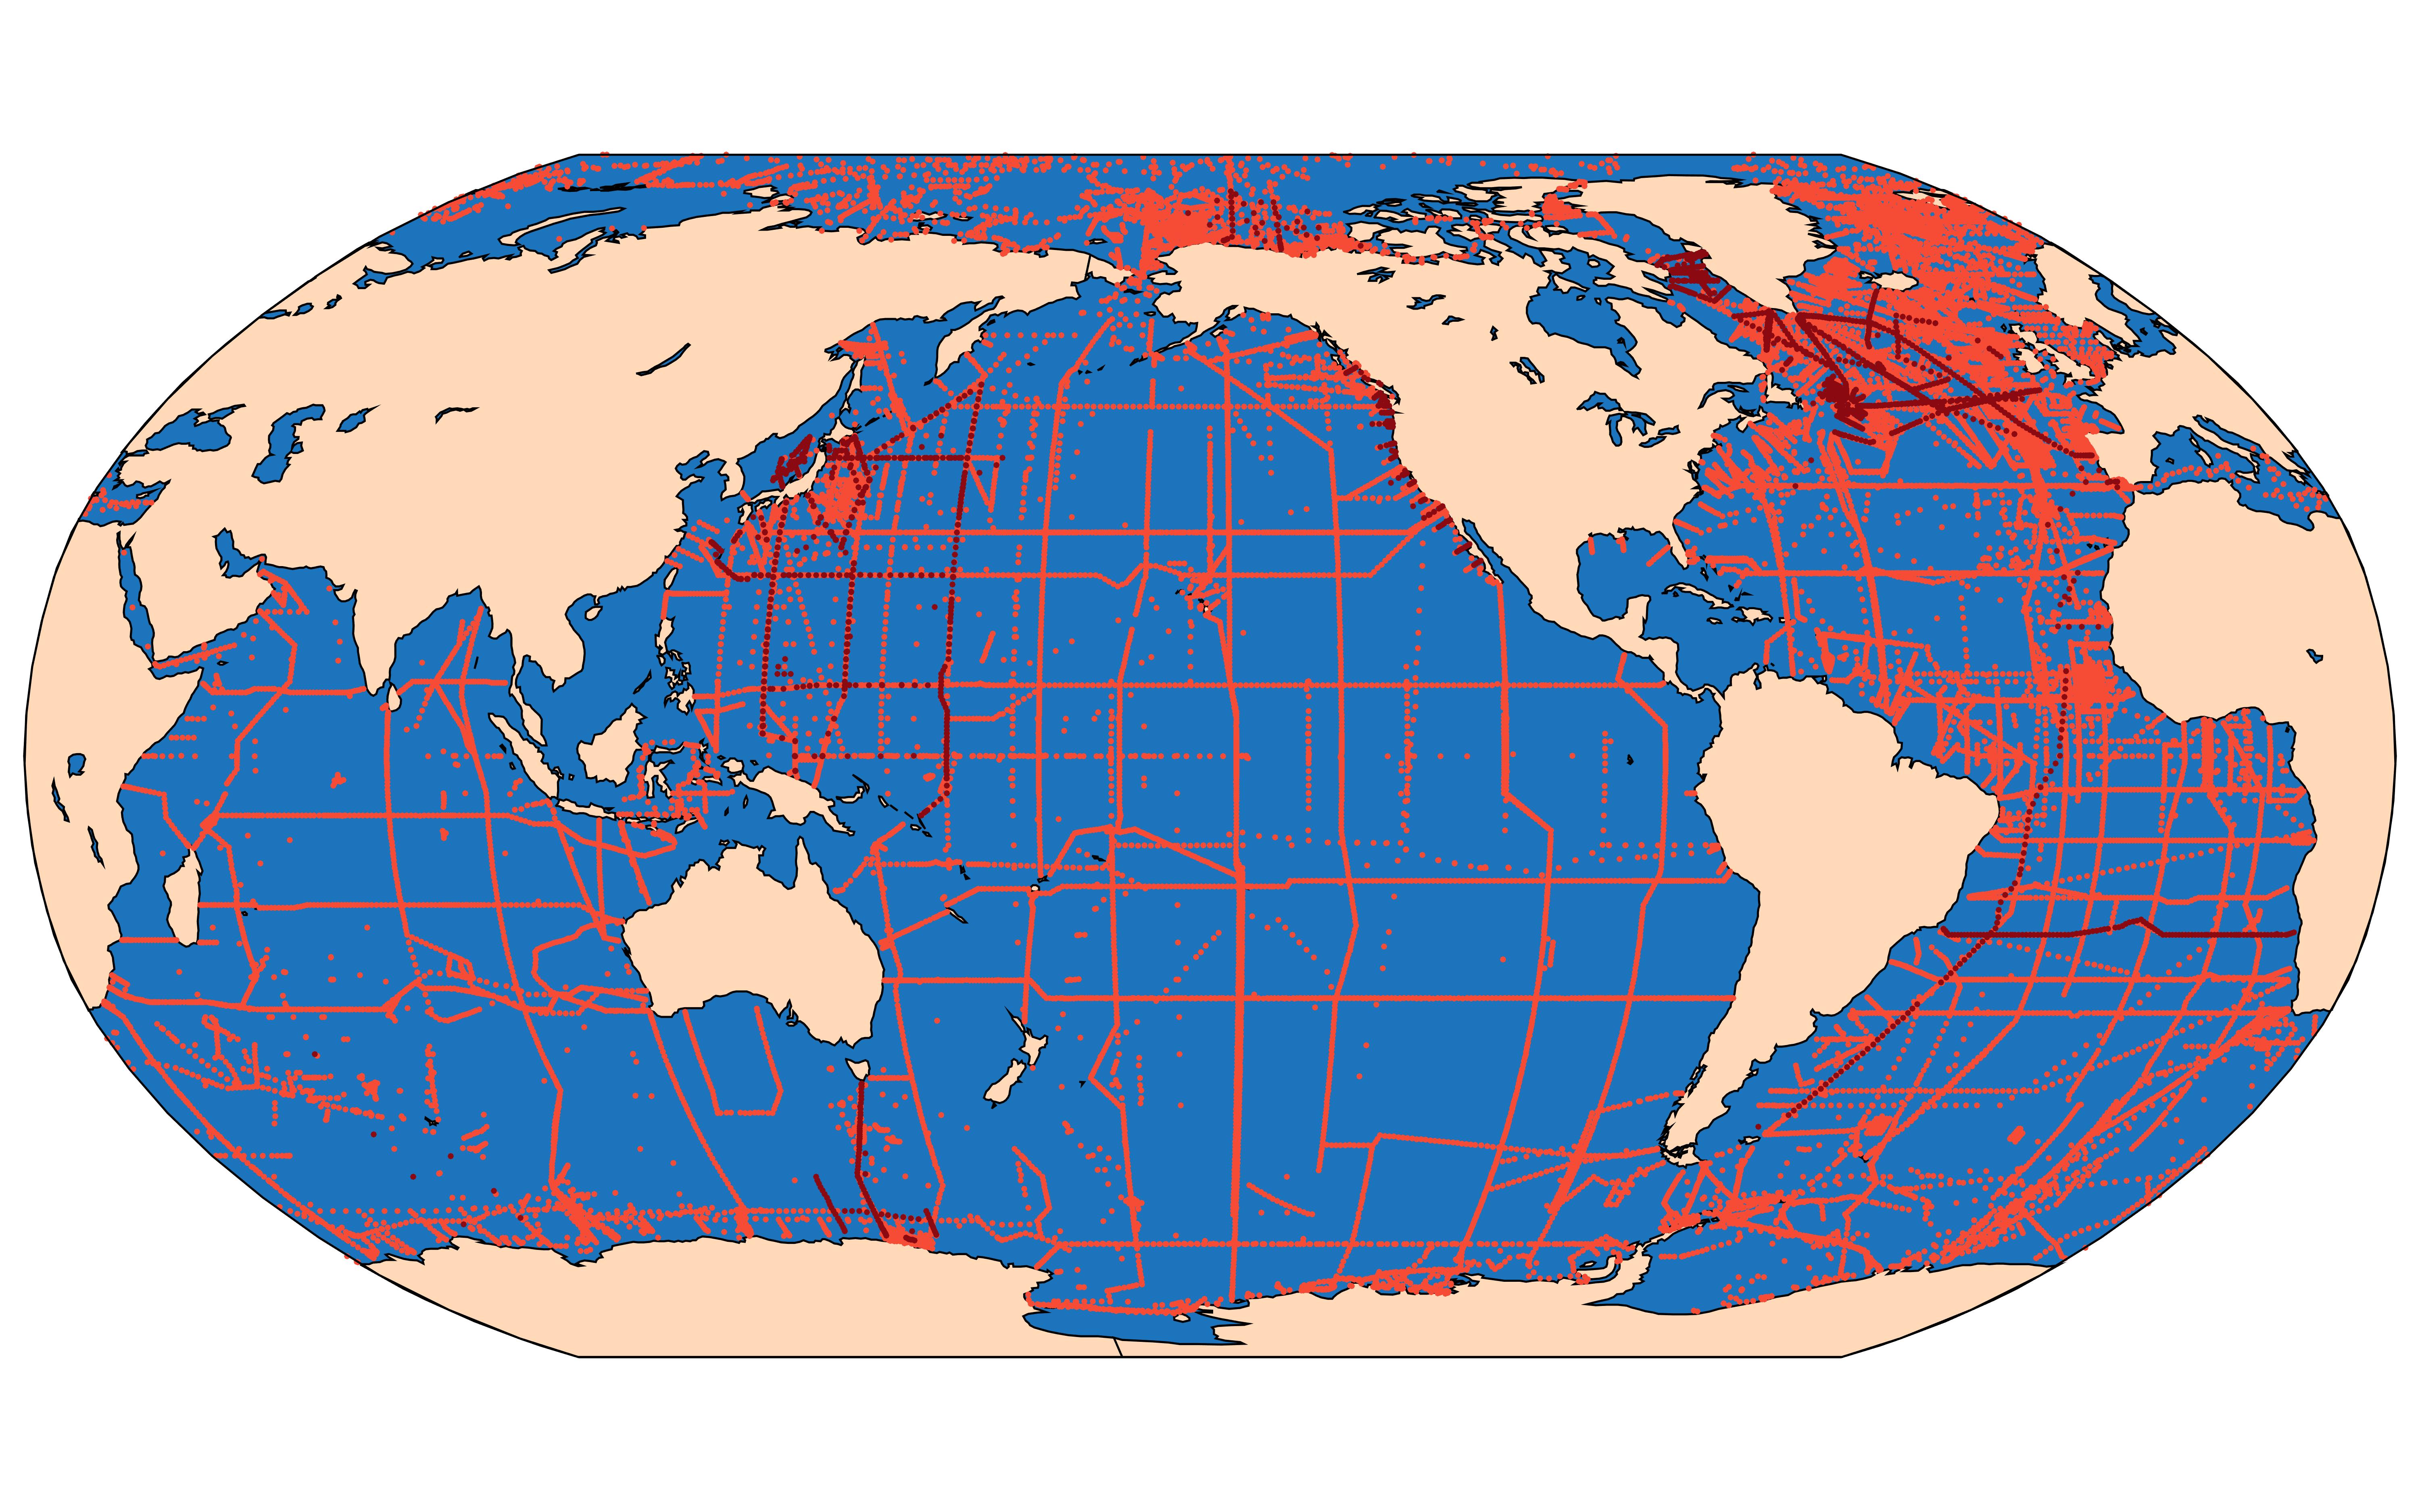 GLODAPv2.2020 Global Map